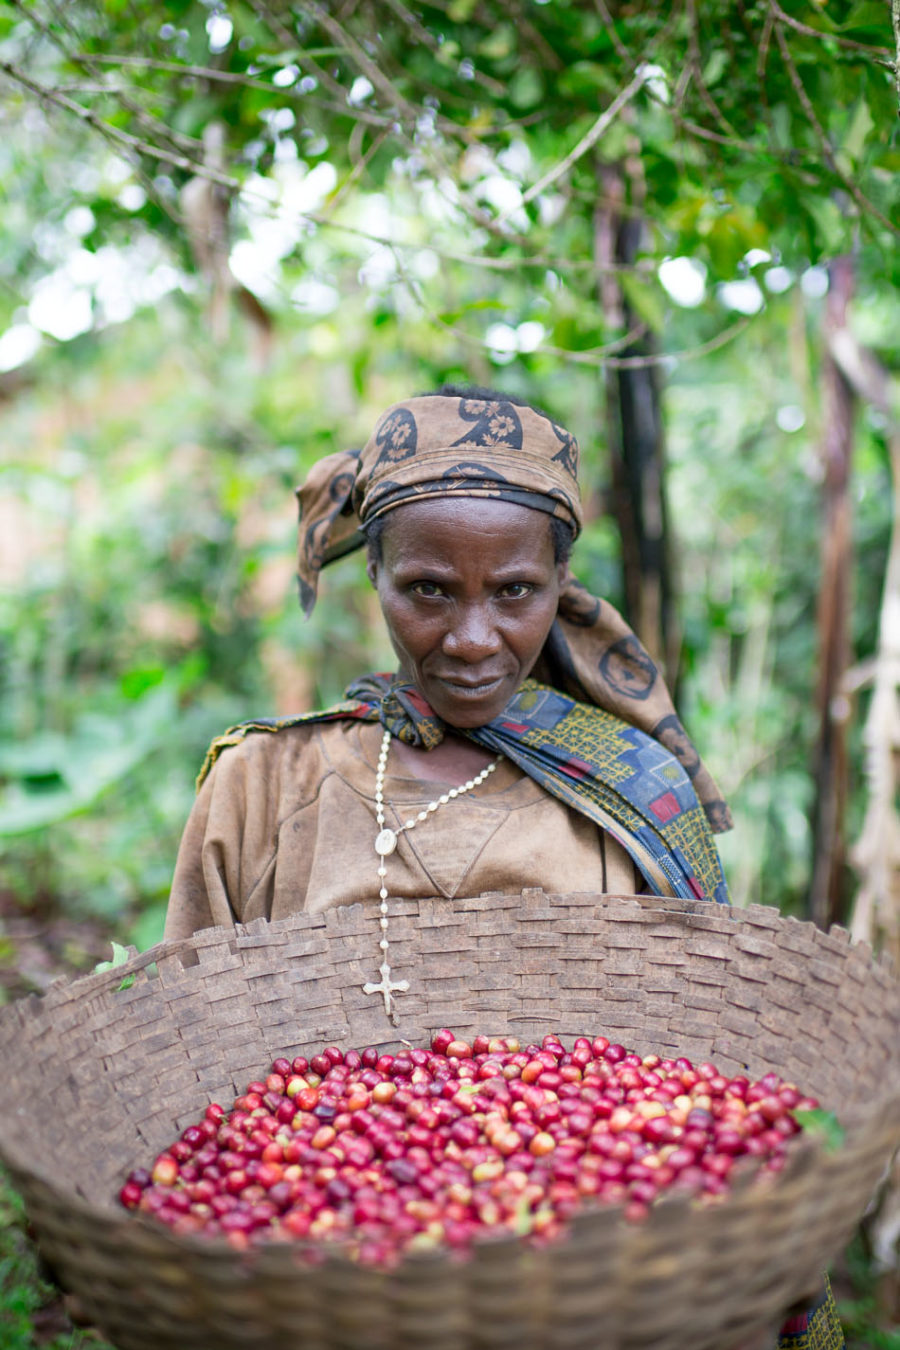 burundi coffee, coffee washing station, coffee cherries, coffee harvest